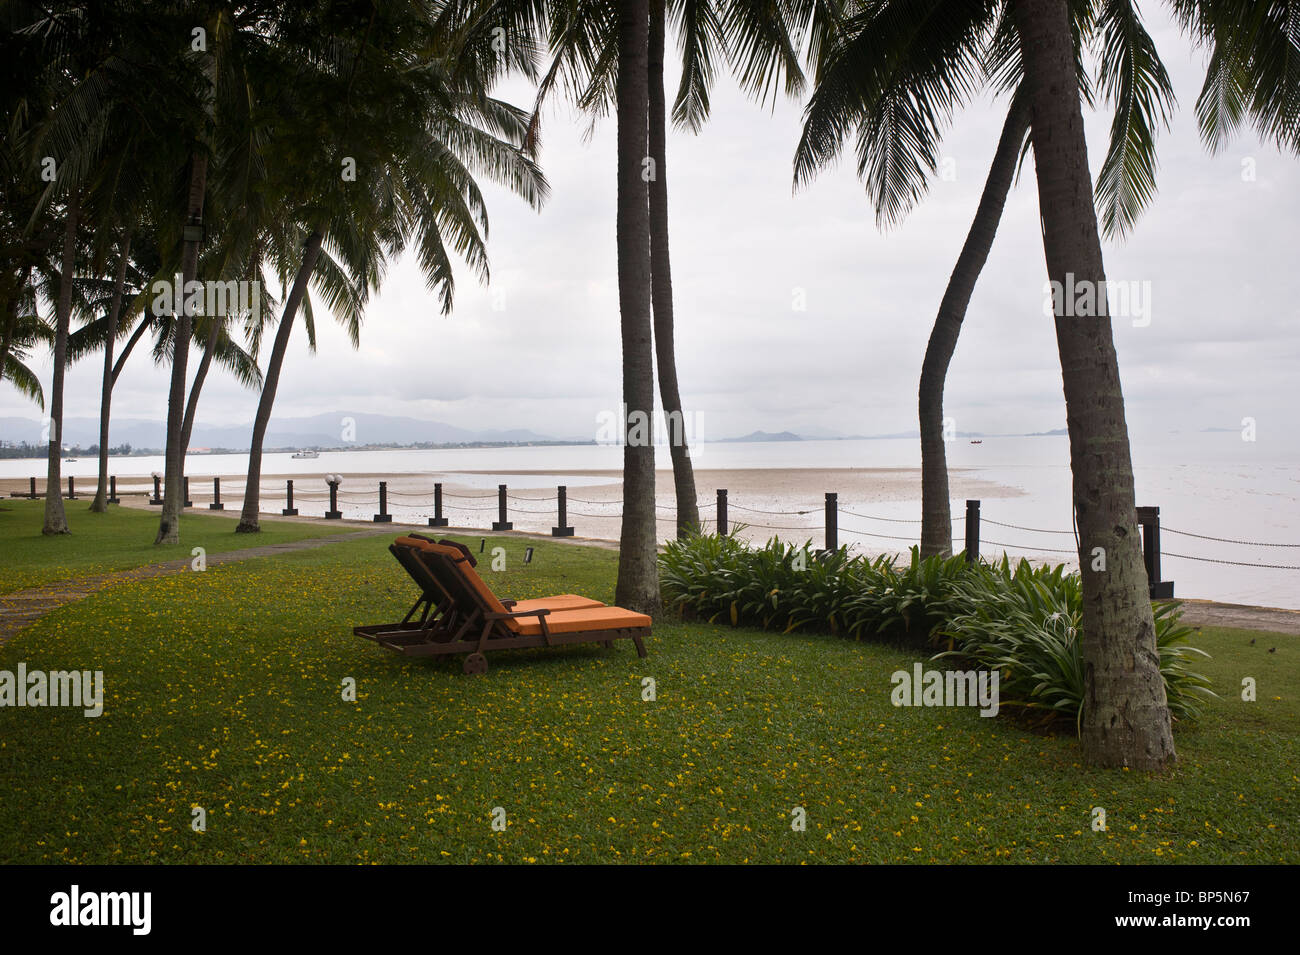 Pequeña playa en Shangri-la Tanjung Aru Resort, a 3 kilómetros al sur del centro de Kota Kinabalu. Strand bij het tropisch sh Foto de stock